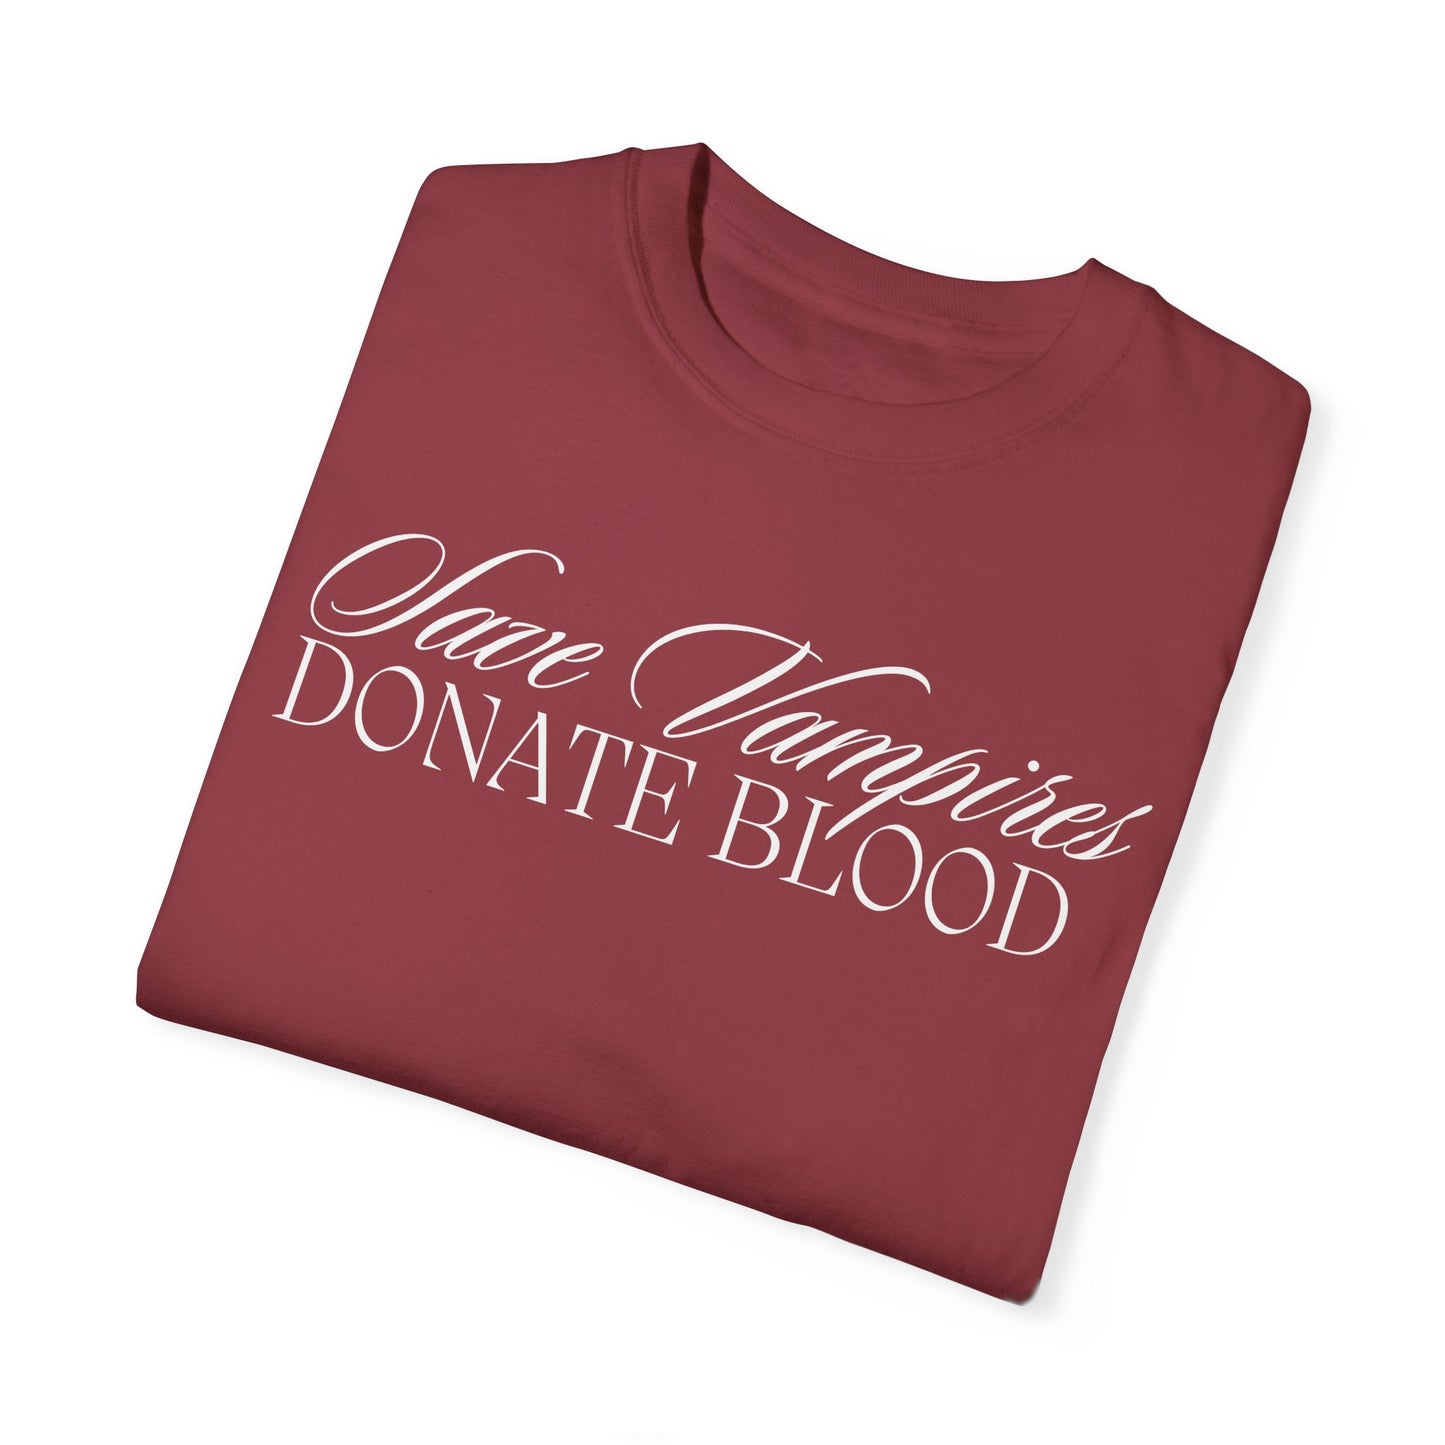 Save Vamps, Donate Blood Tshirt